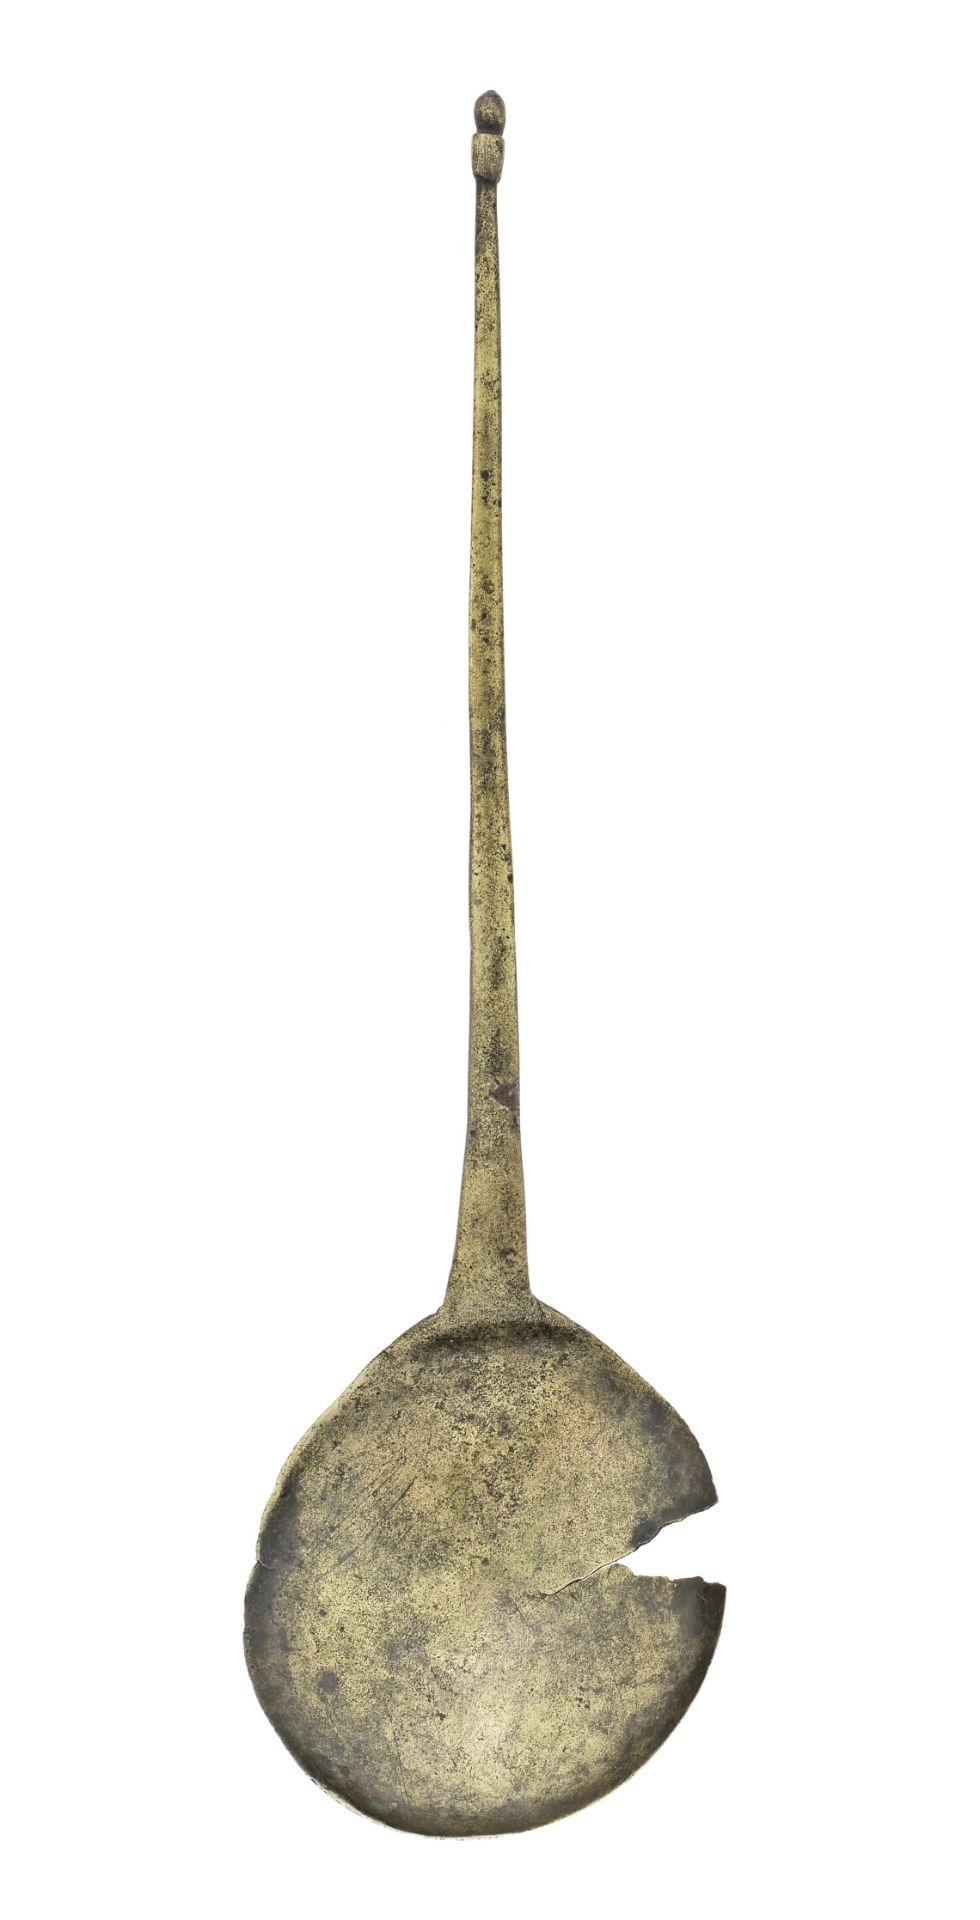 A rare 13th century primitive cut-and-filed proto-acorn knop spoon